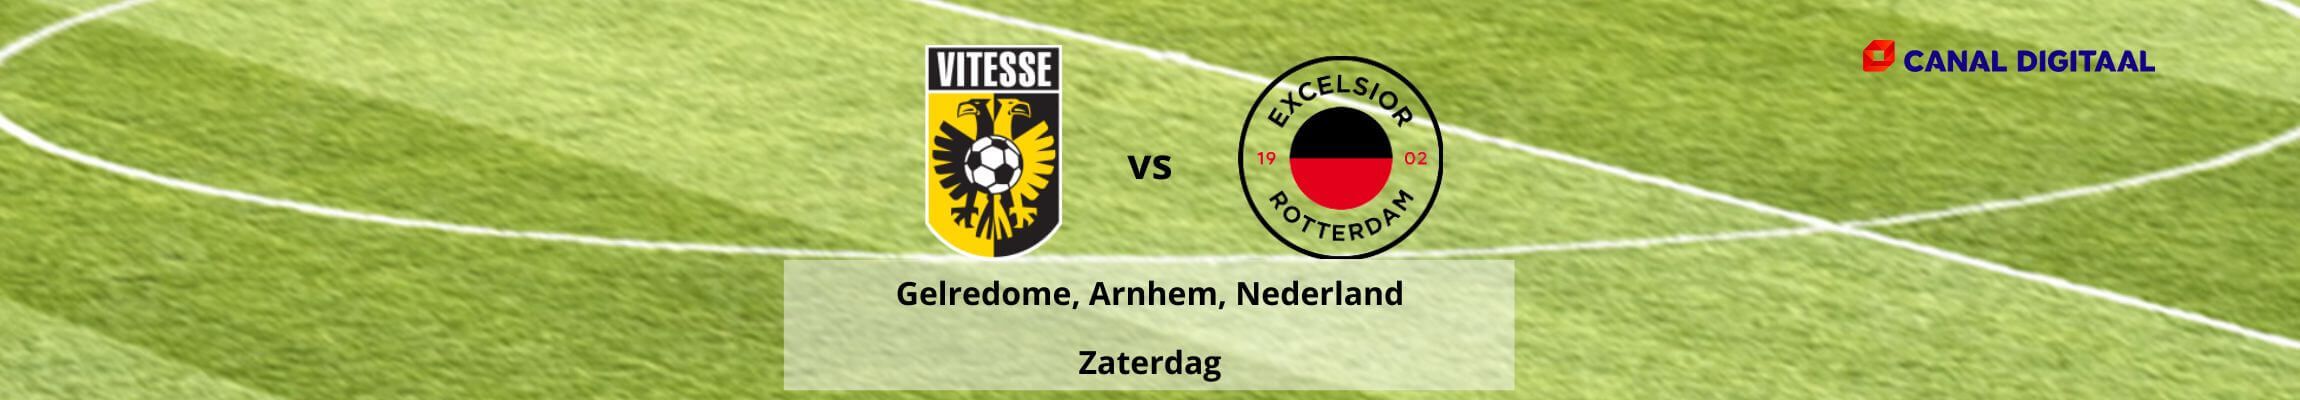 Vitesse vs Excelsior Rotterdam